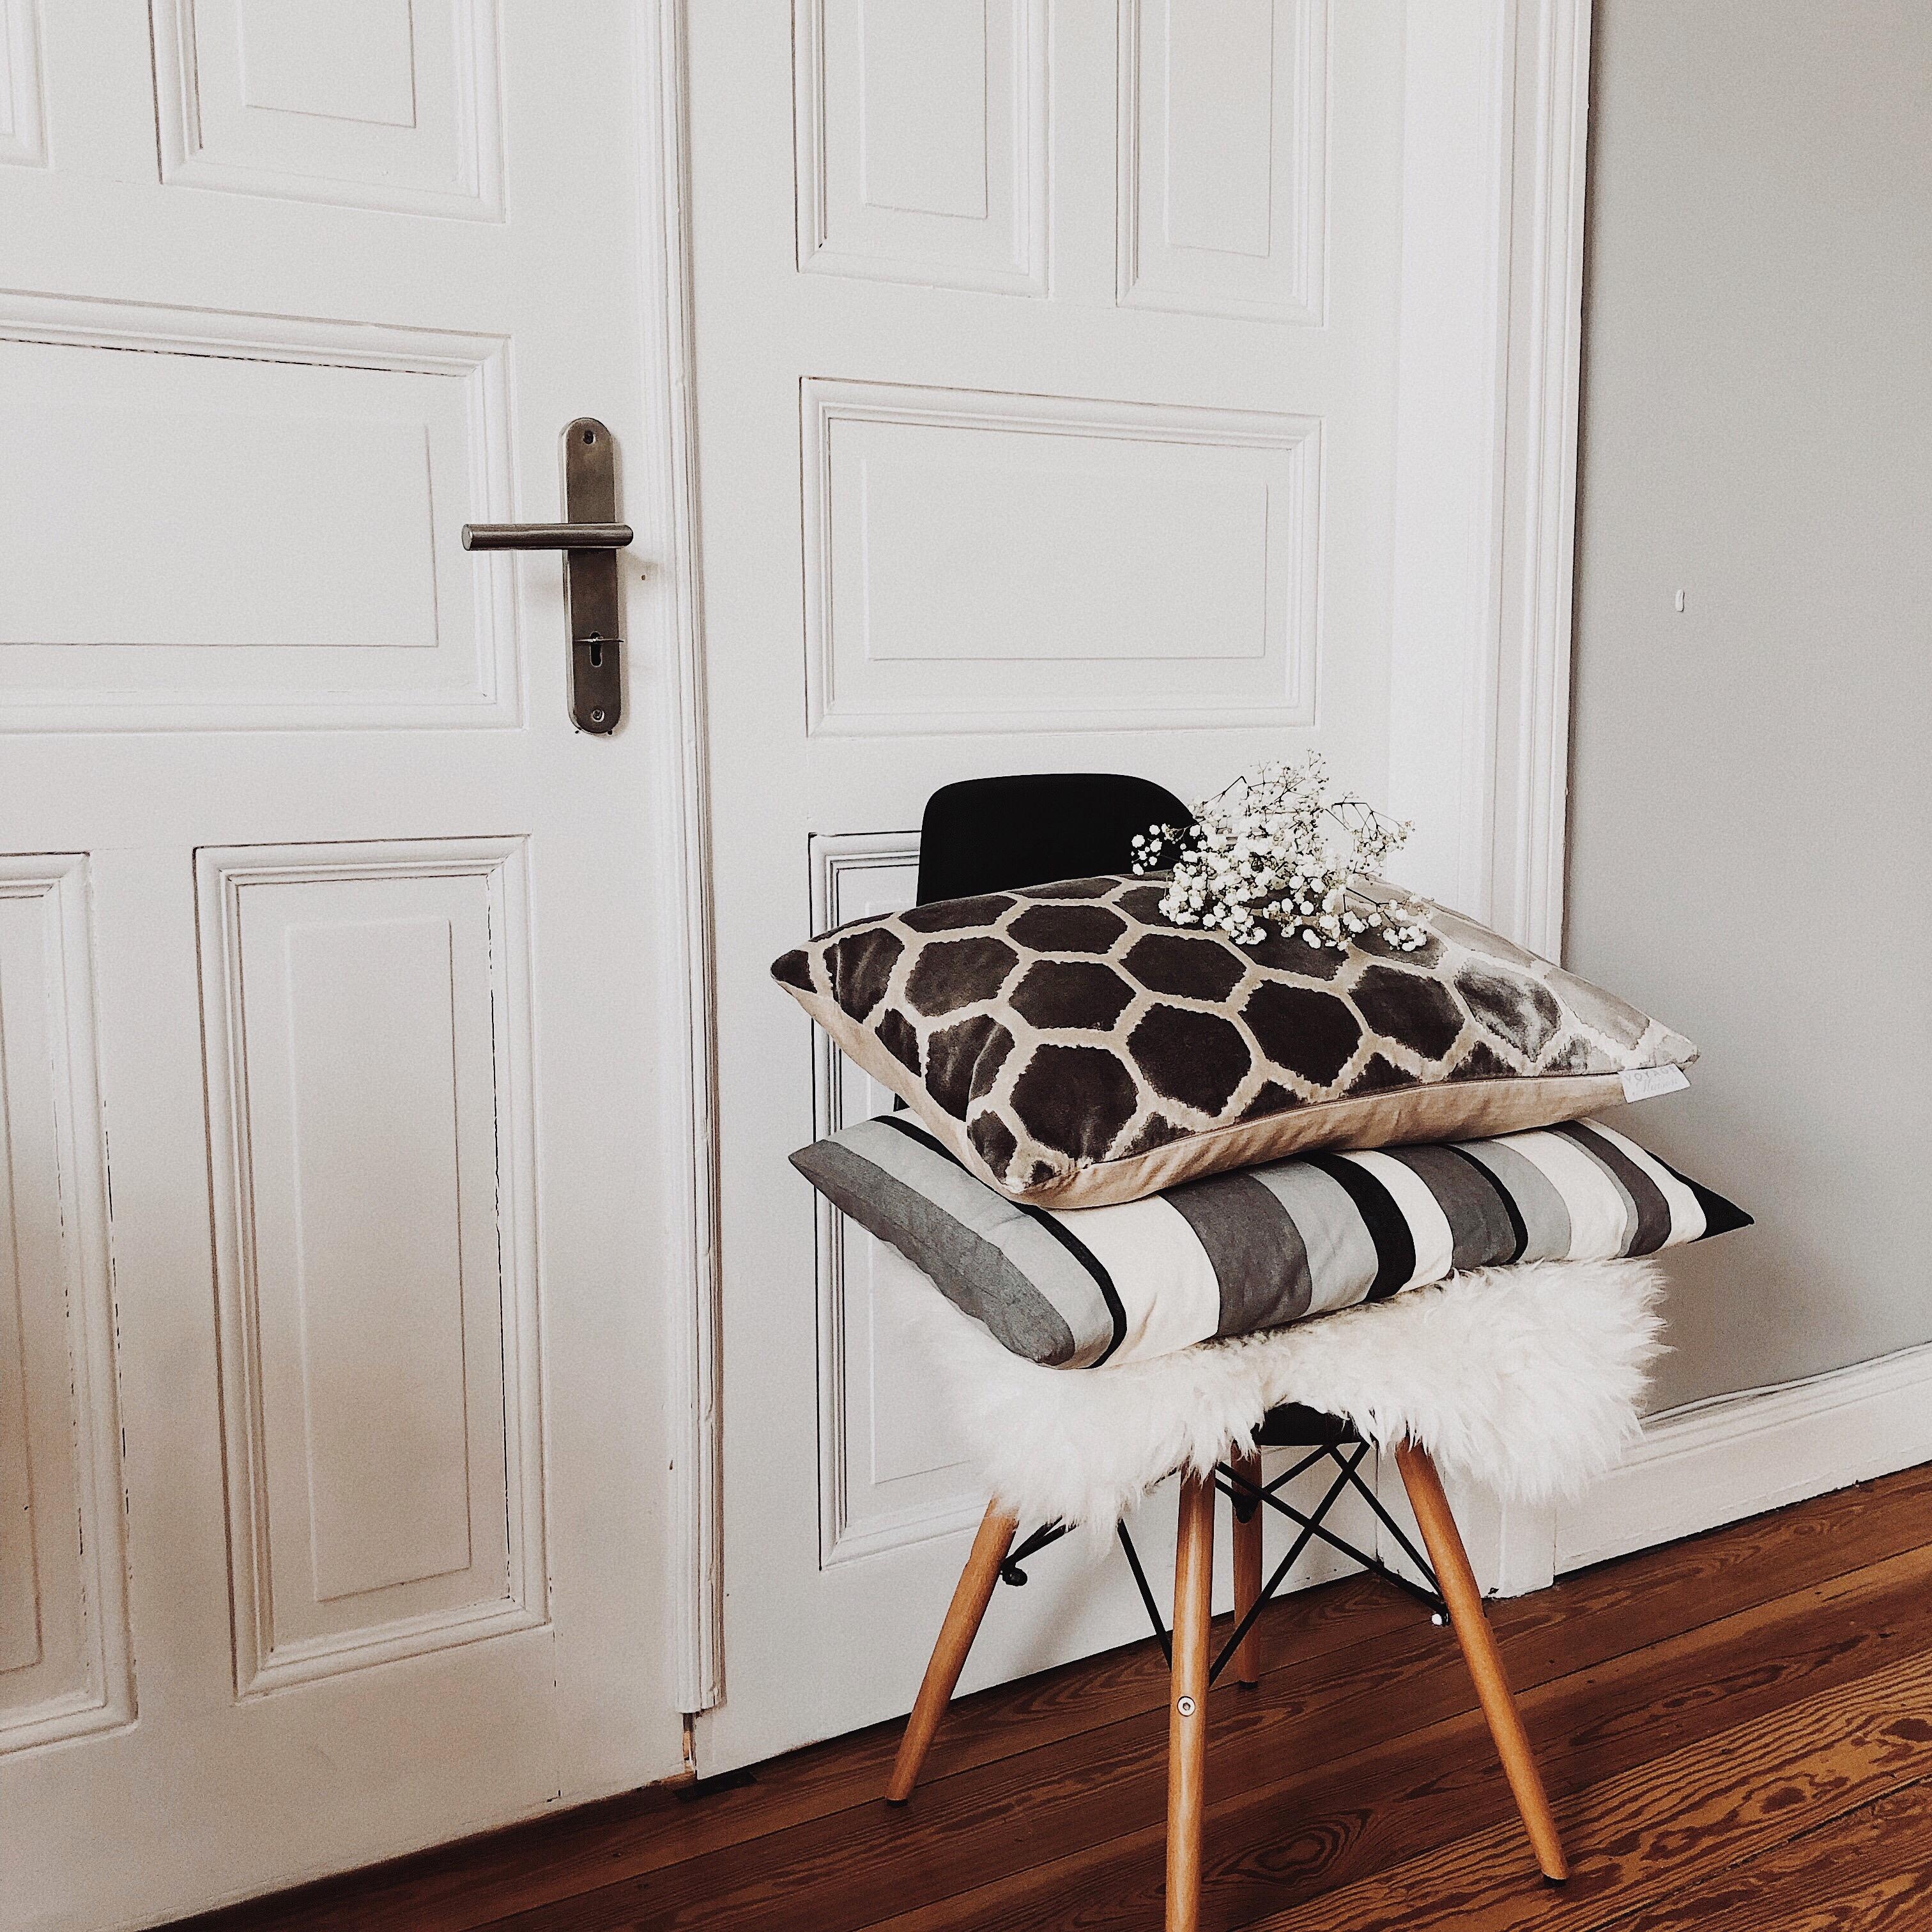 shades of grey #chair #skandistyle #living #decor #kissen #altbau #textiles #minimalism #nordichome